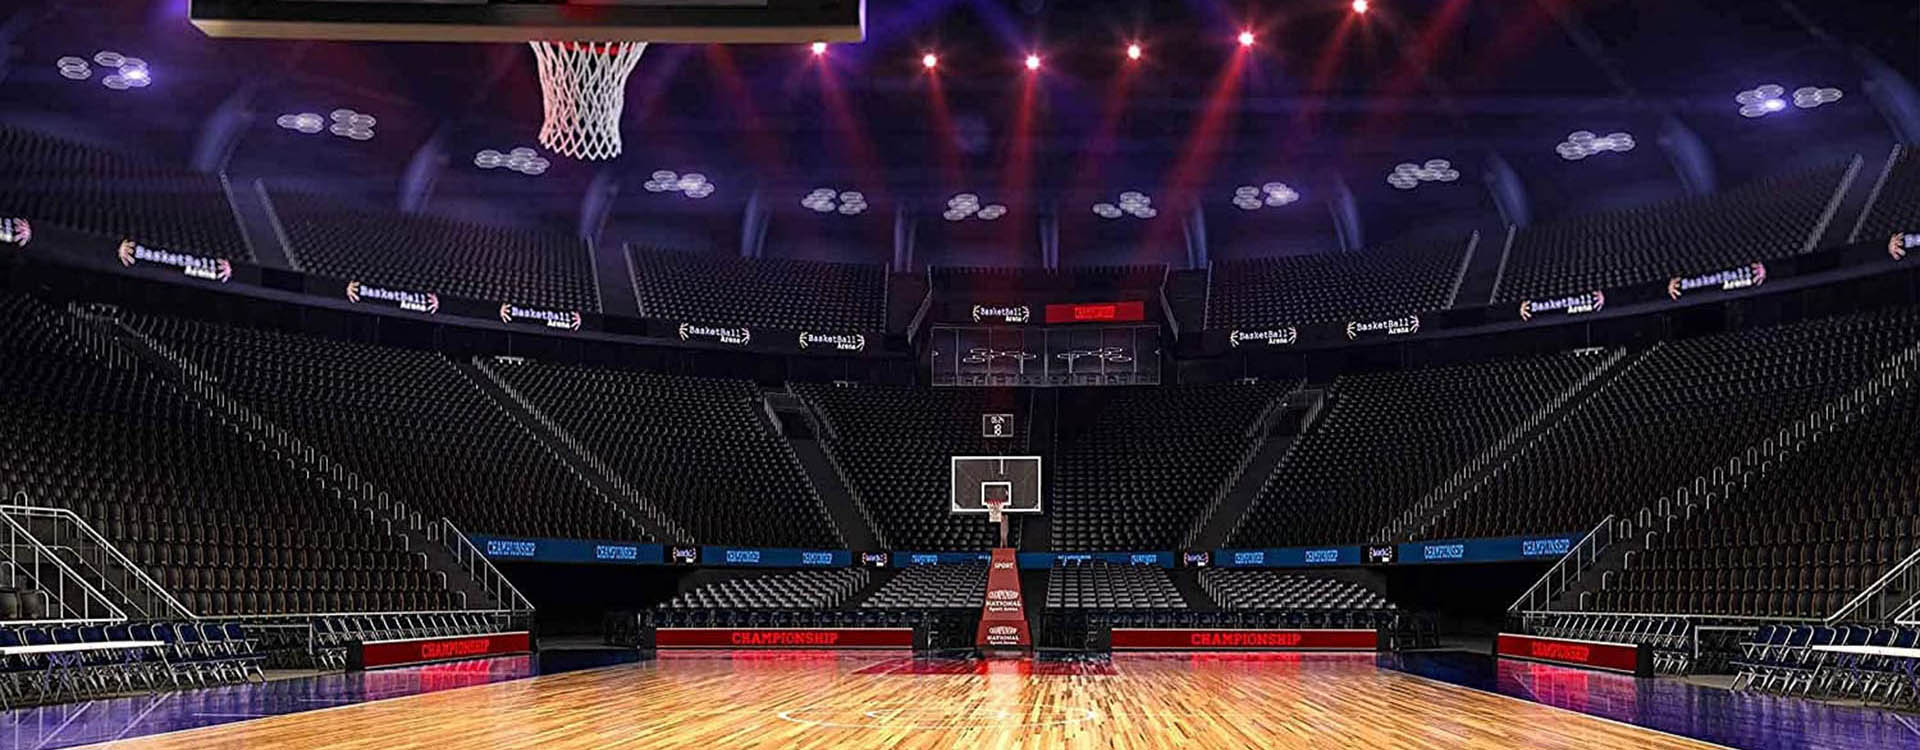 campo-basket-illuminazione-led-1